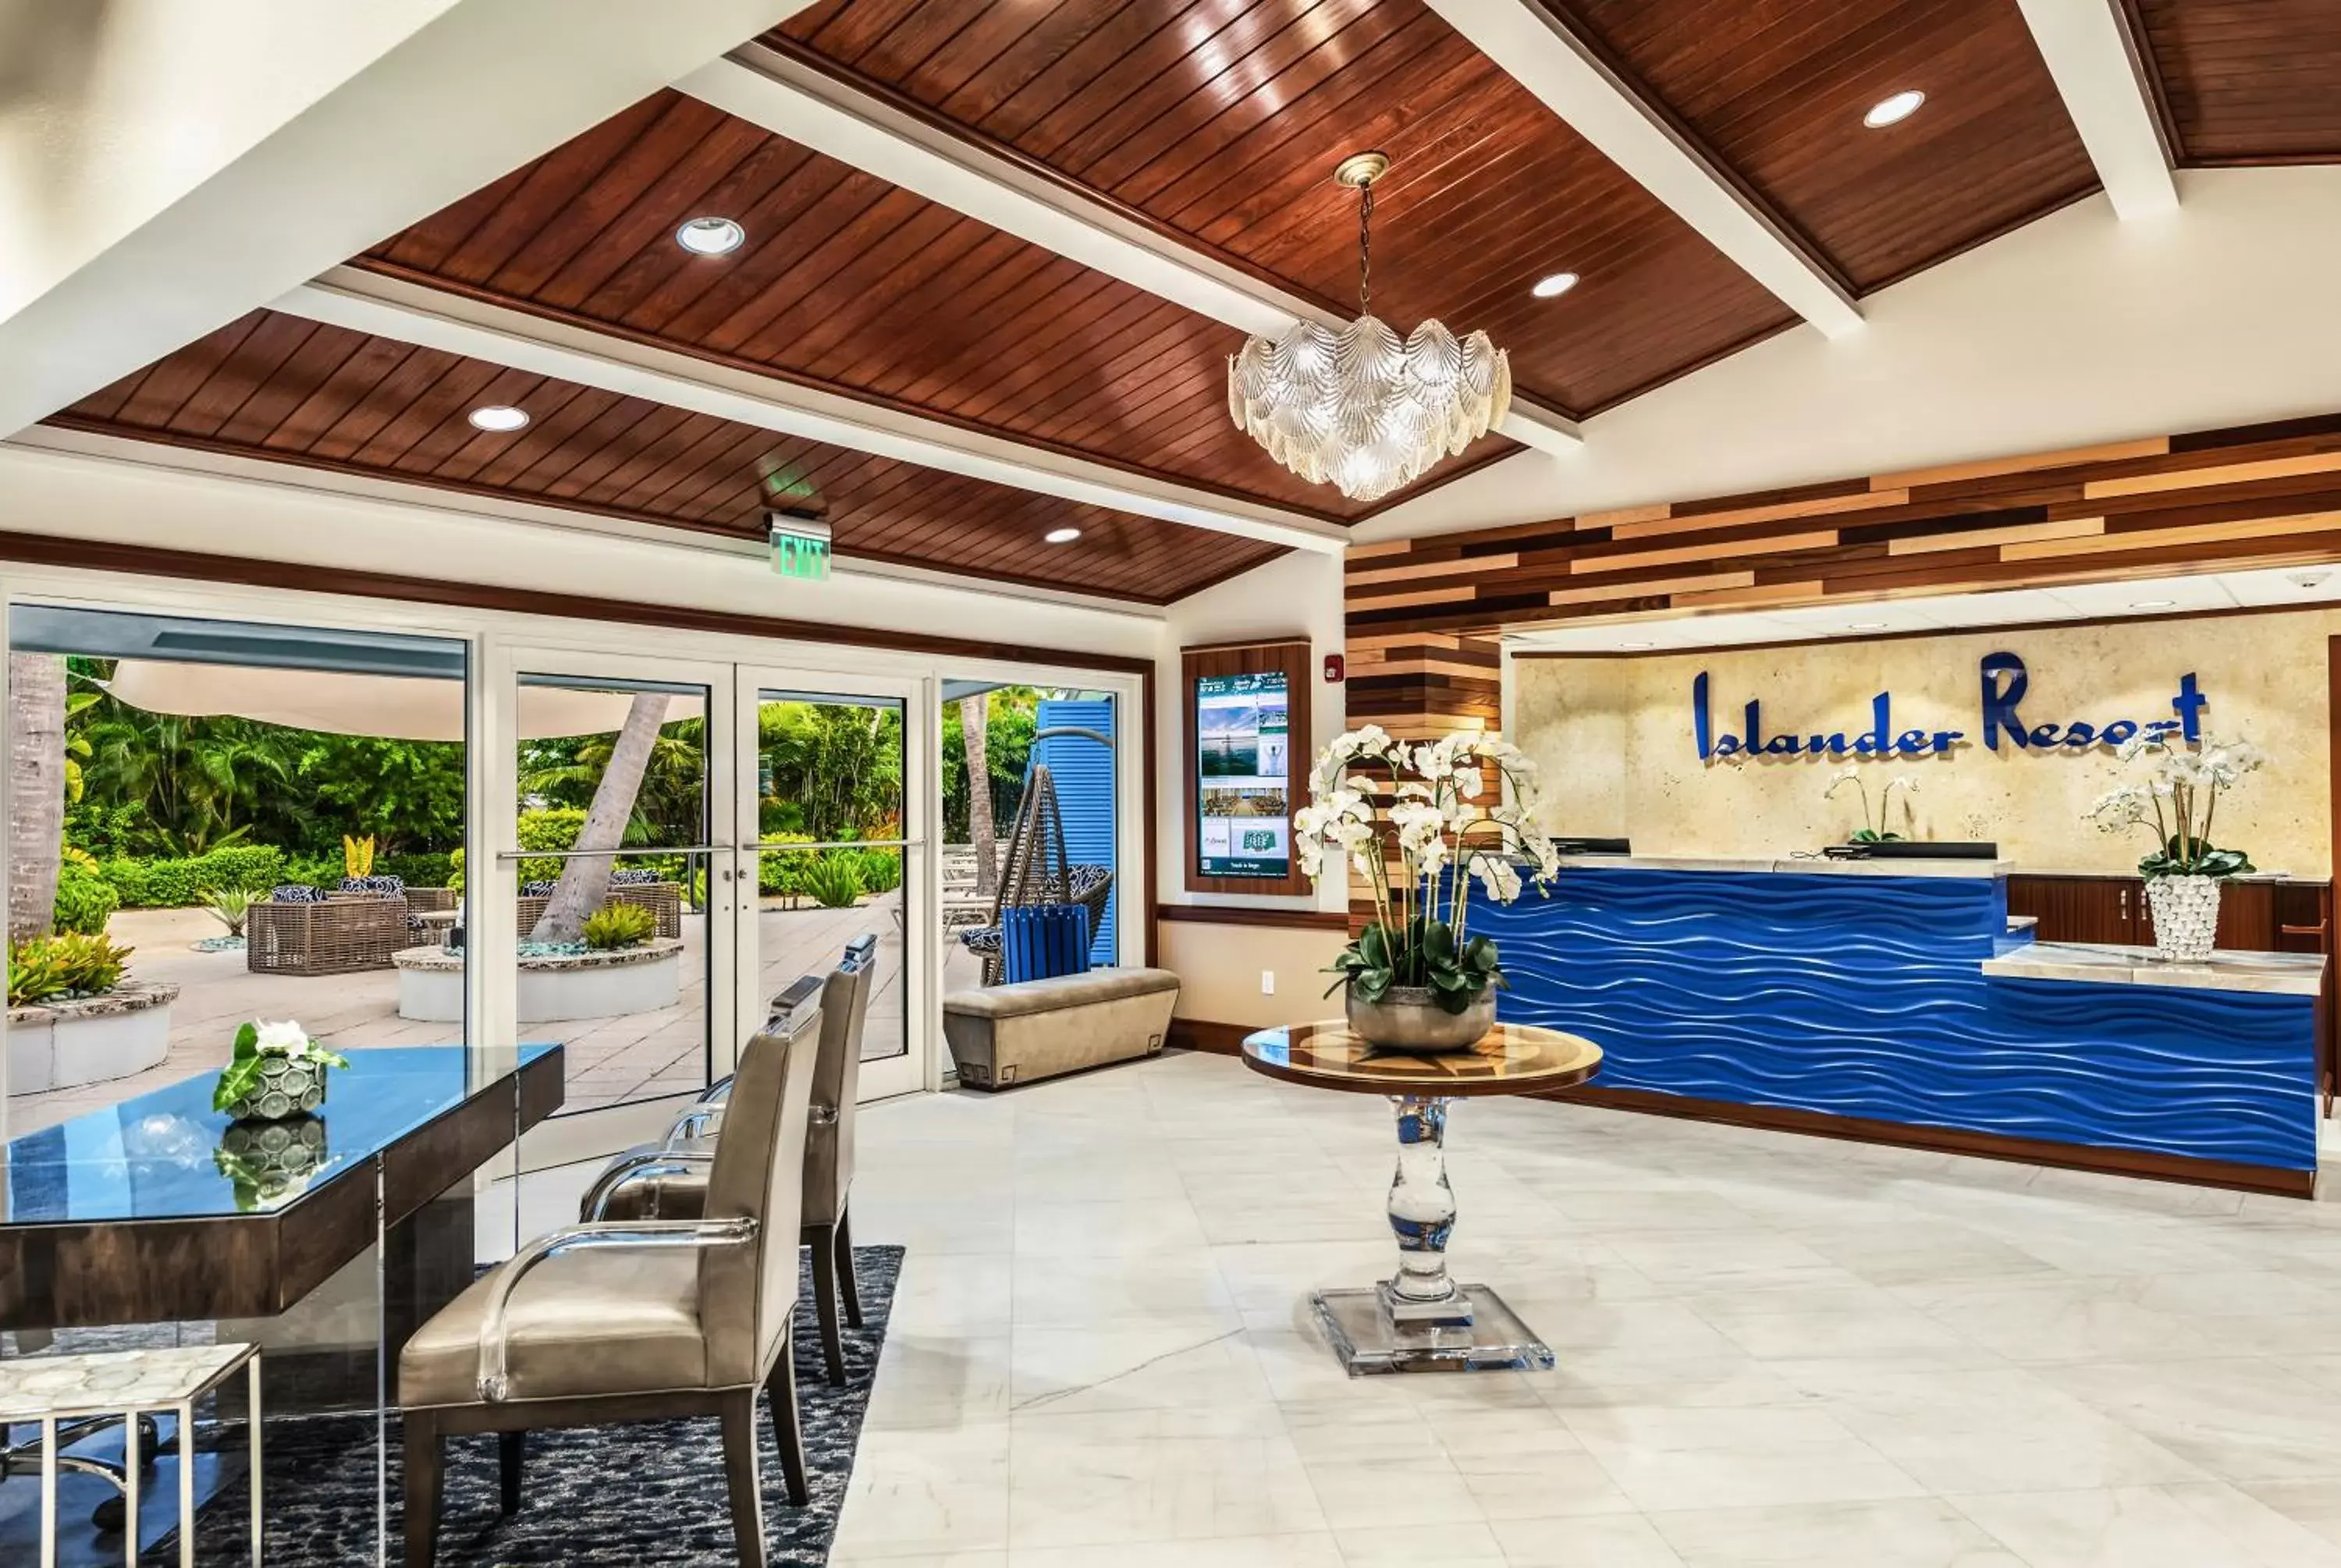 Lobby or reception in Islander Resort